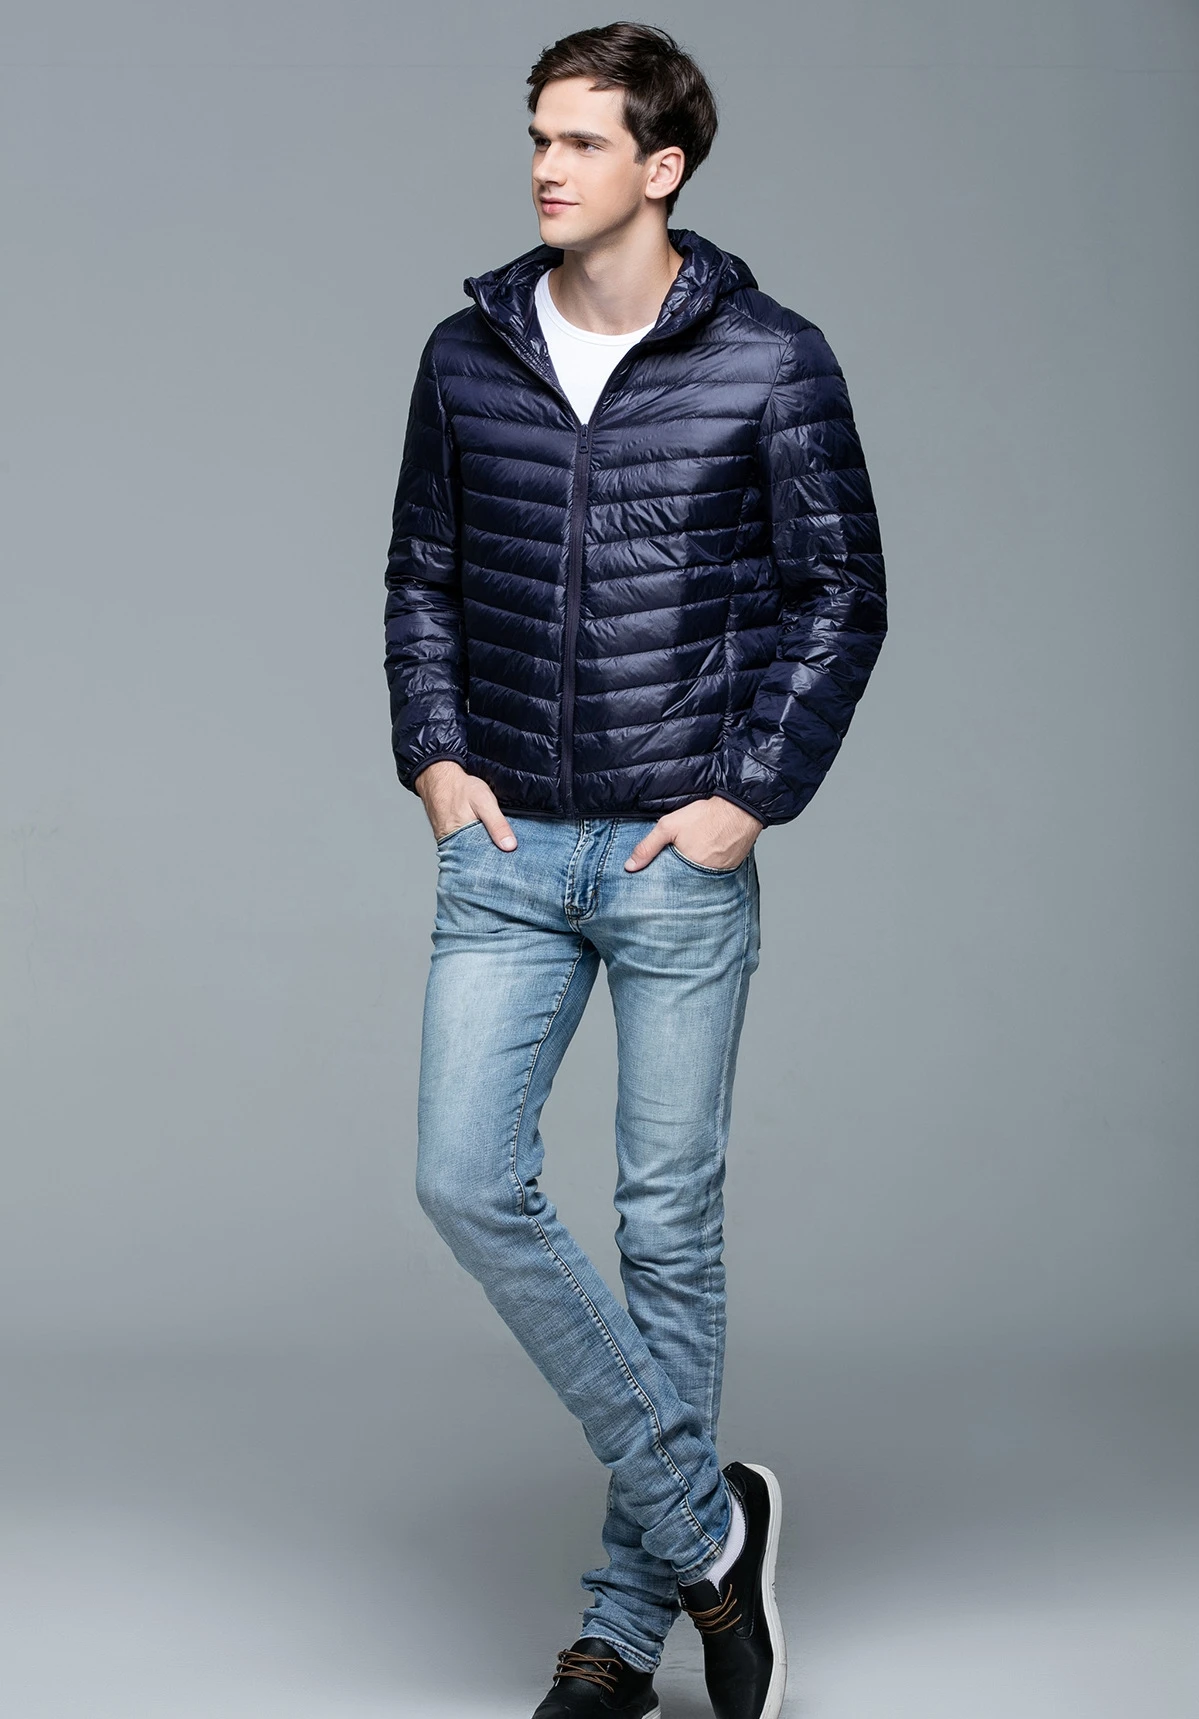 Top Quality Men's Lightweight Water-Resistant Packable Puffer Jacket Men Hooded Winter Autumn Down Jackets Warm Outwear Coat long puffer coat